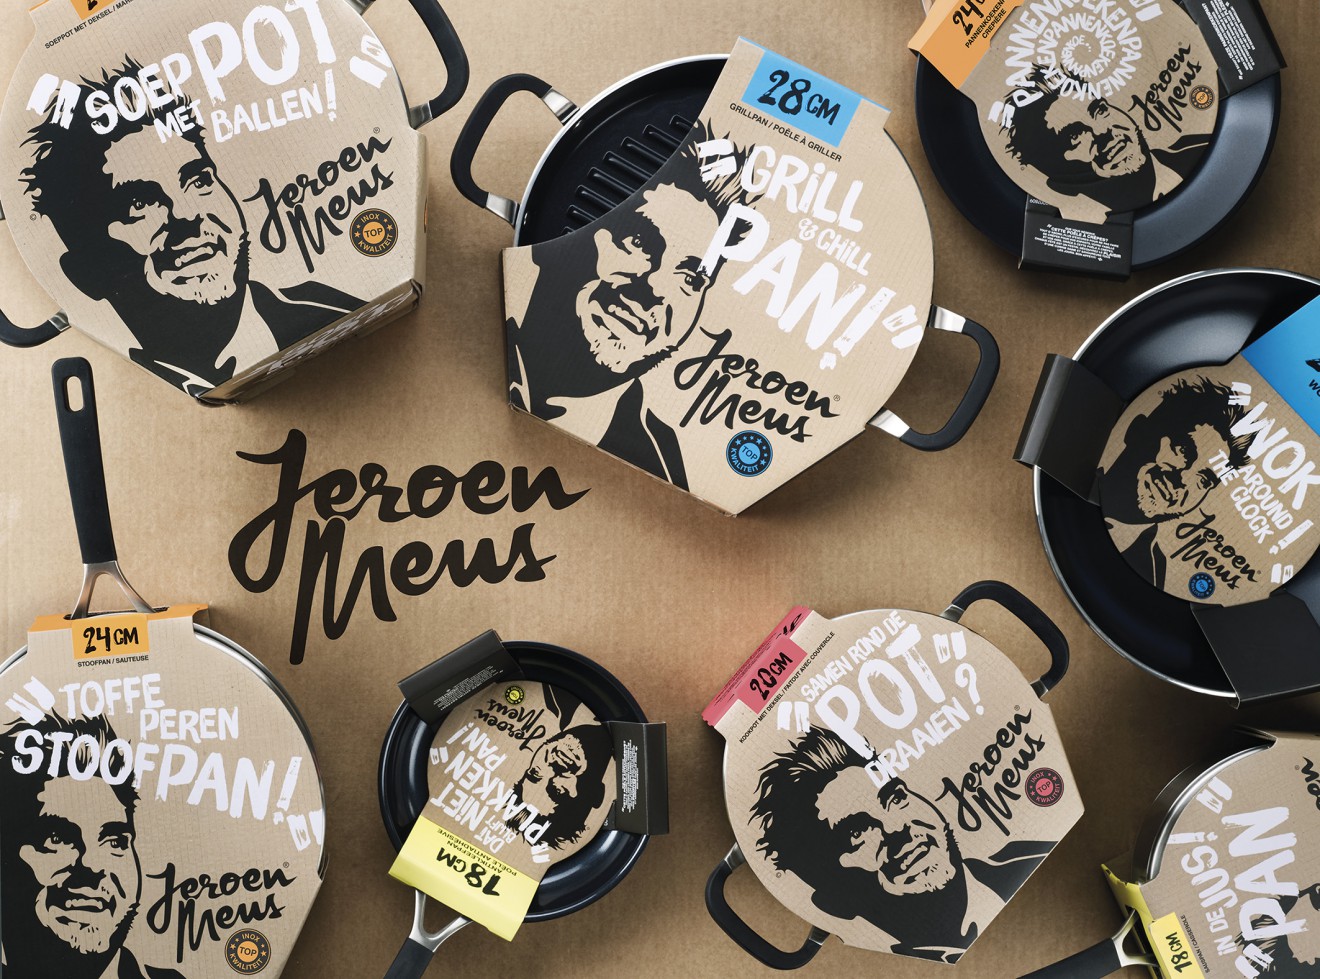 Jeroen Meus - Golden Pentaward - A 'personality' branded range of pots and